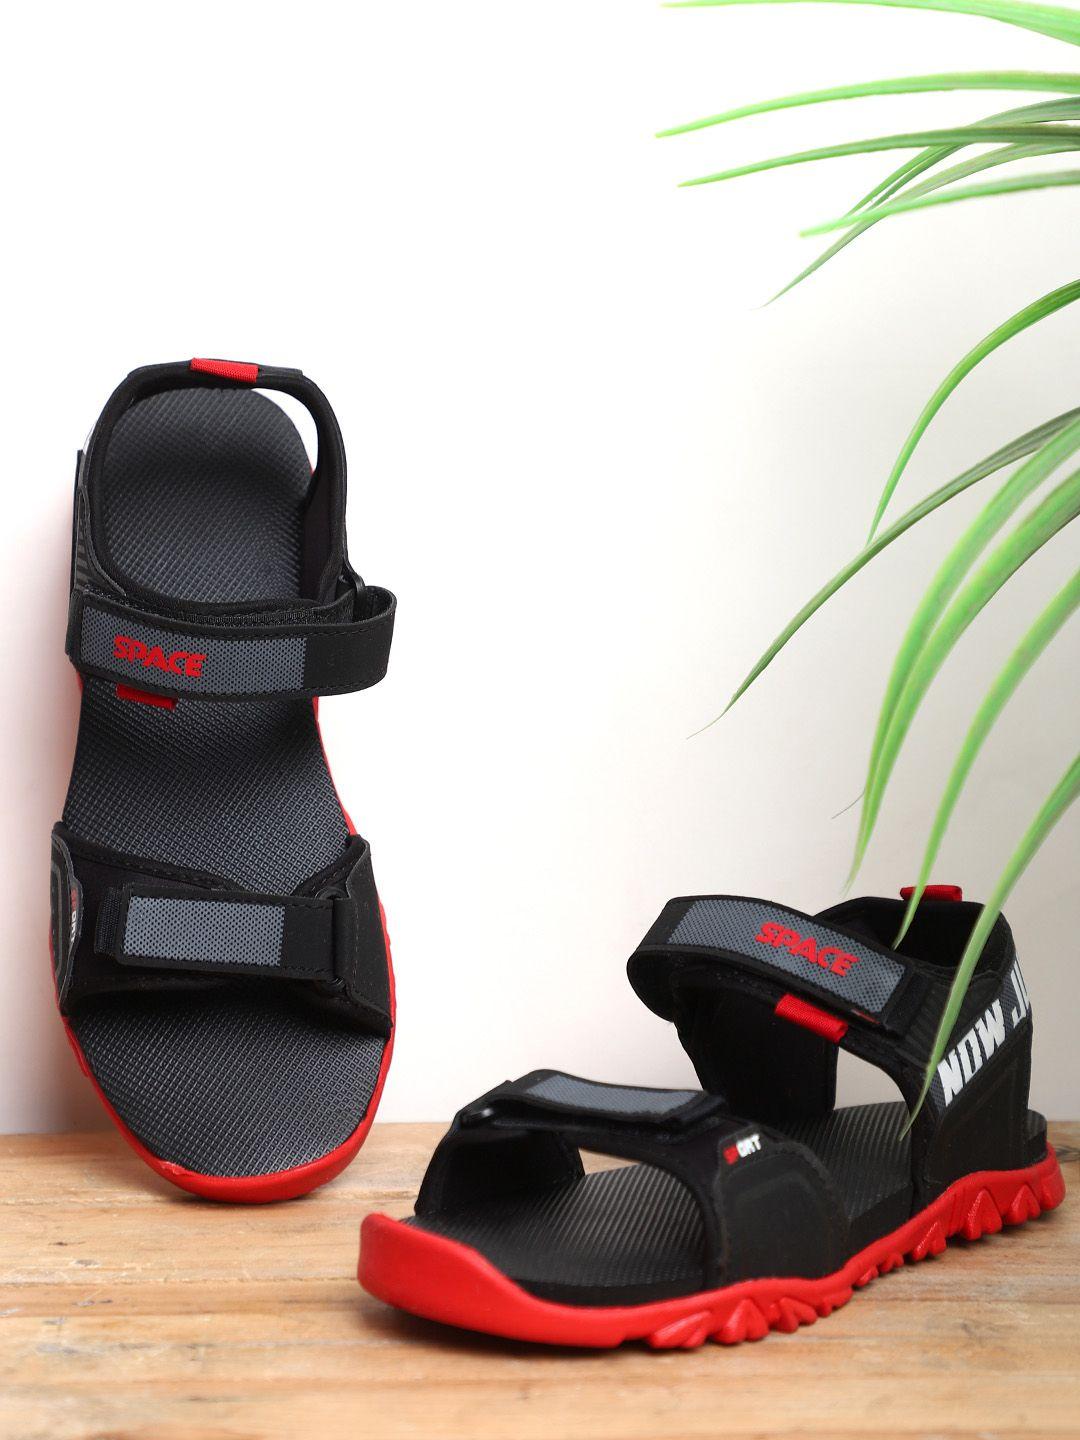 Space Men Black & Red Comfort Sandals